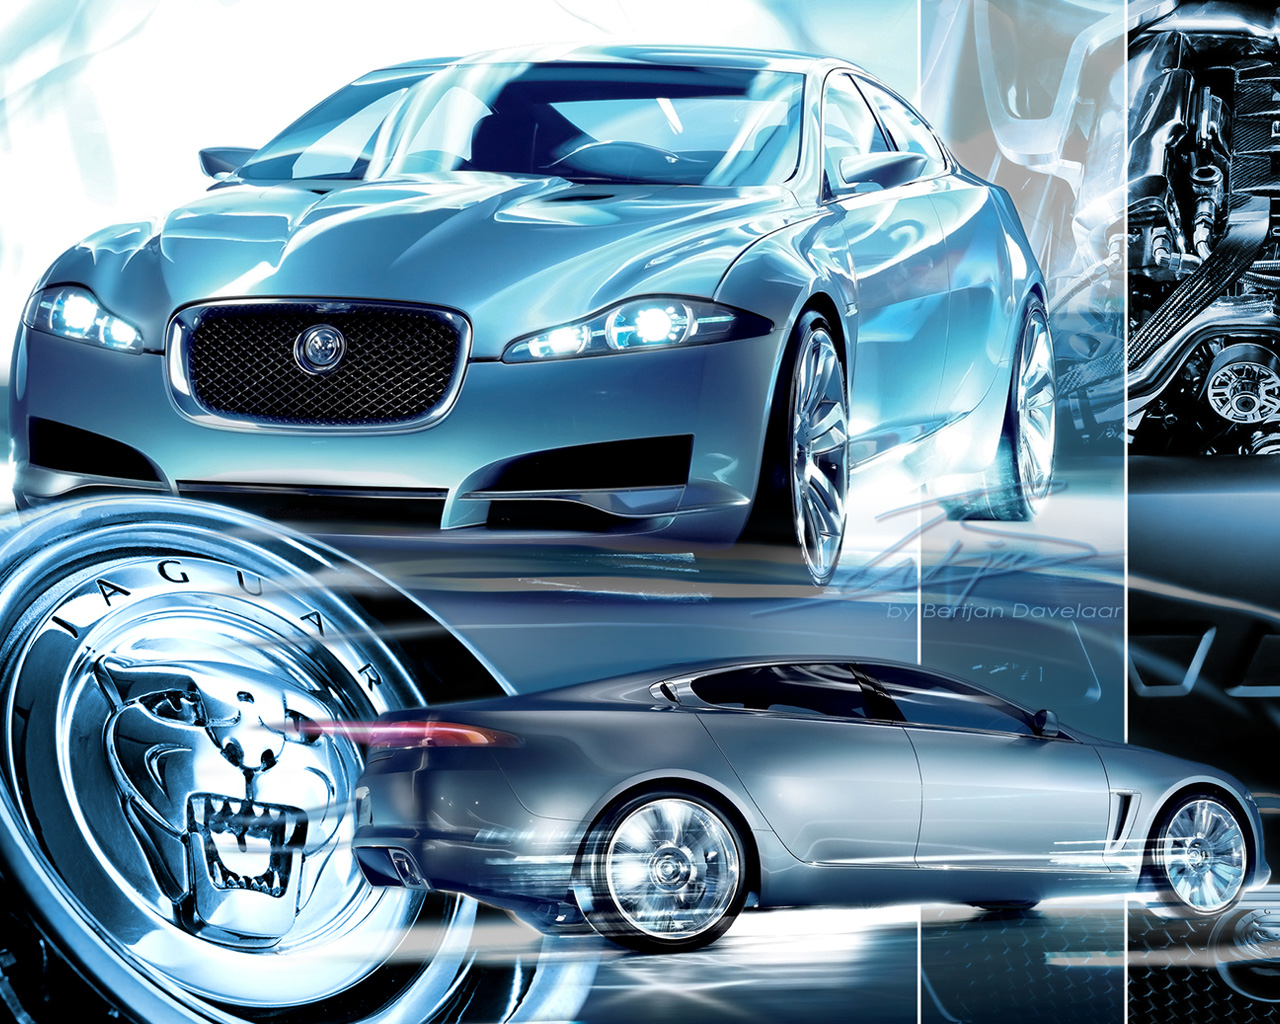 fond d'écran jaguar xf,véhicule de luxe,véhicule,voiture,voiture de luxe personnelle,voiture de sport